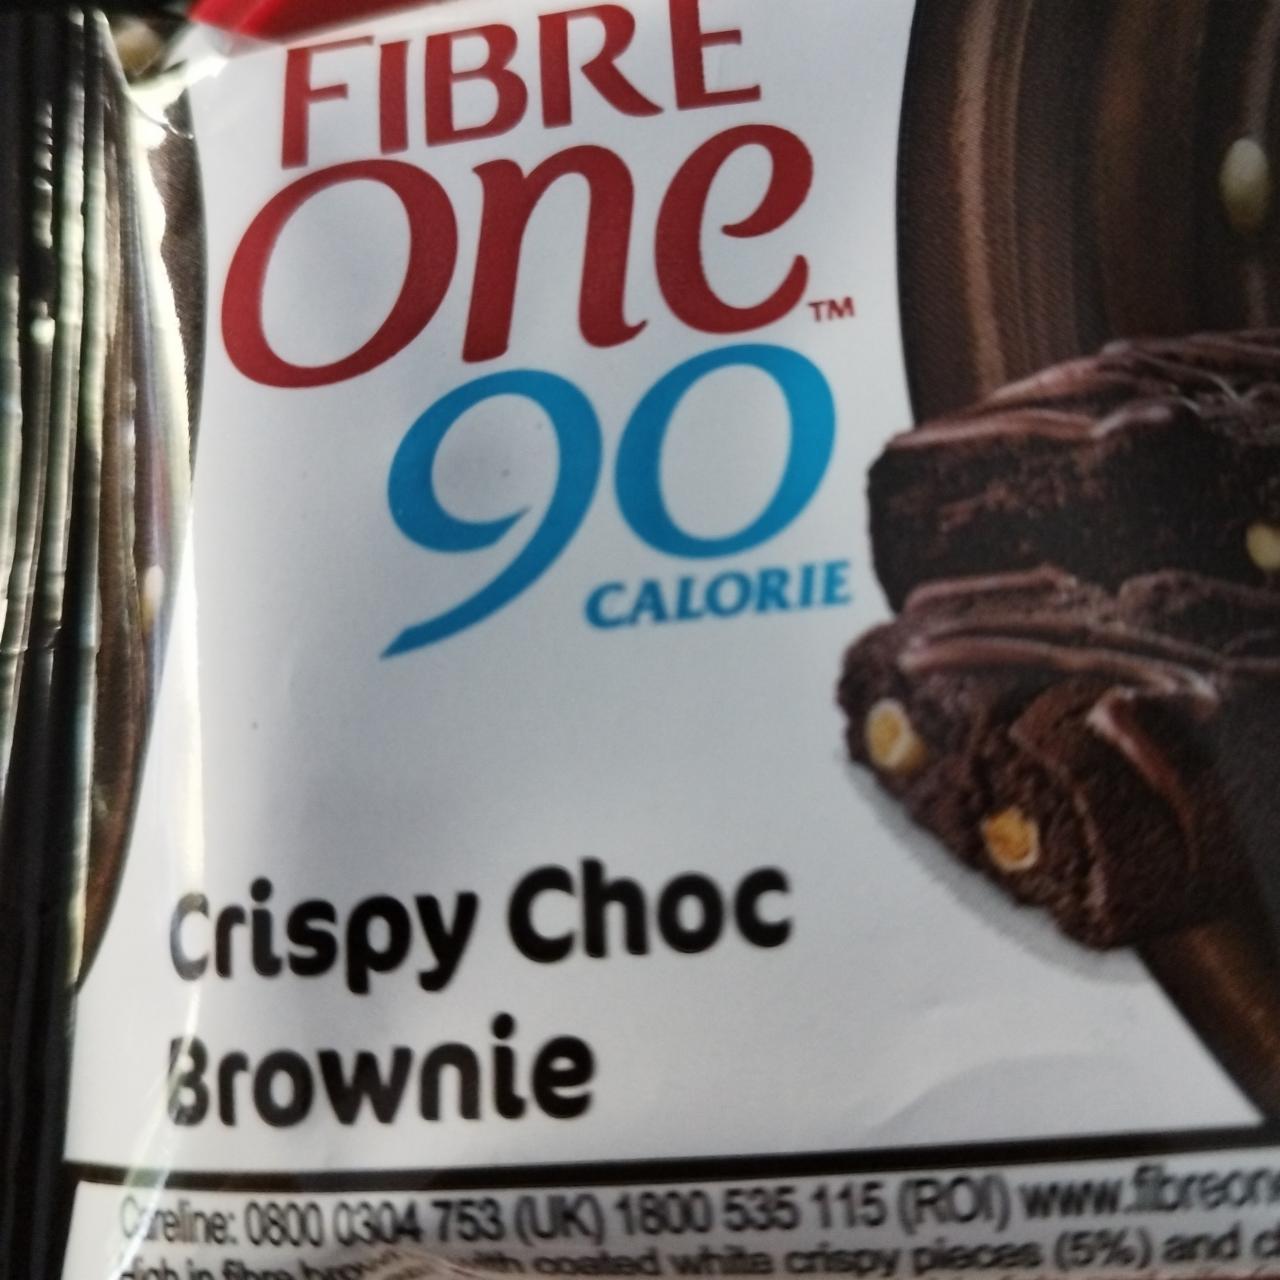 Fotografie - 90 Calorie Crispy Choc Brownie Fibre One